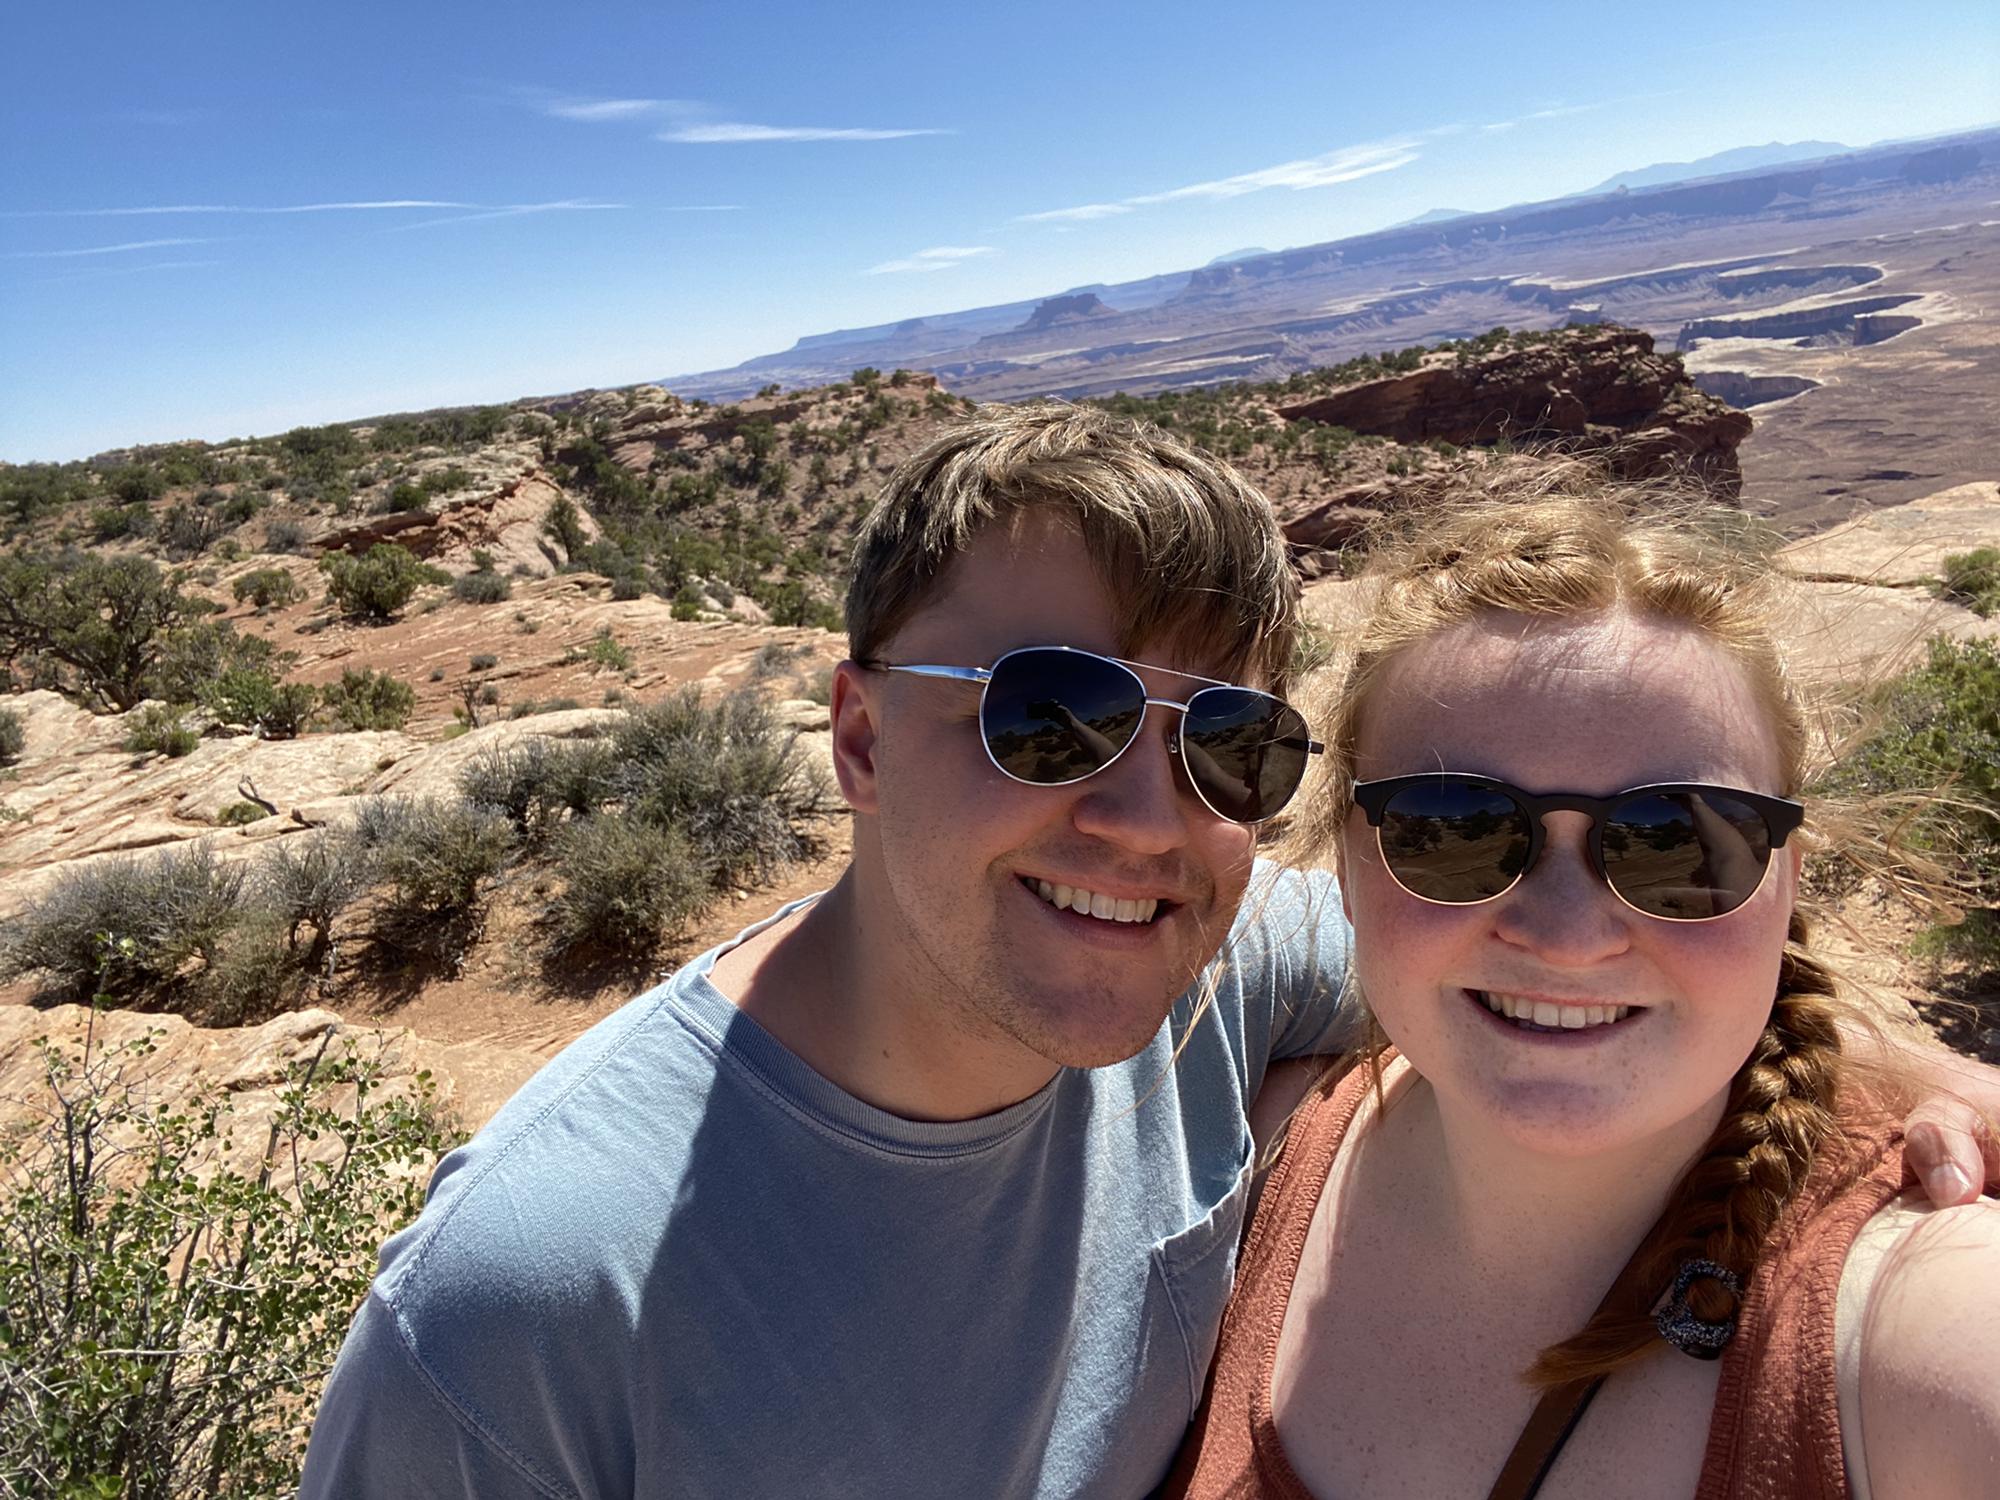 Exploring Canyonlands National Park!
June 2021